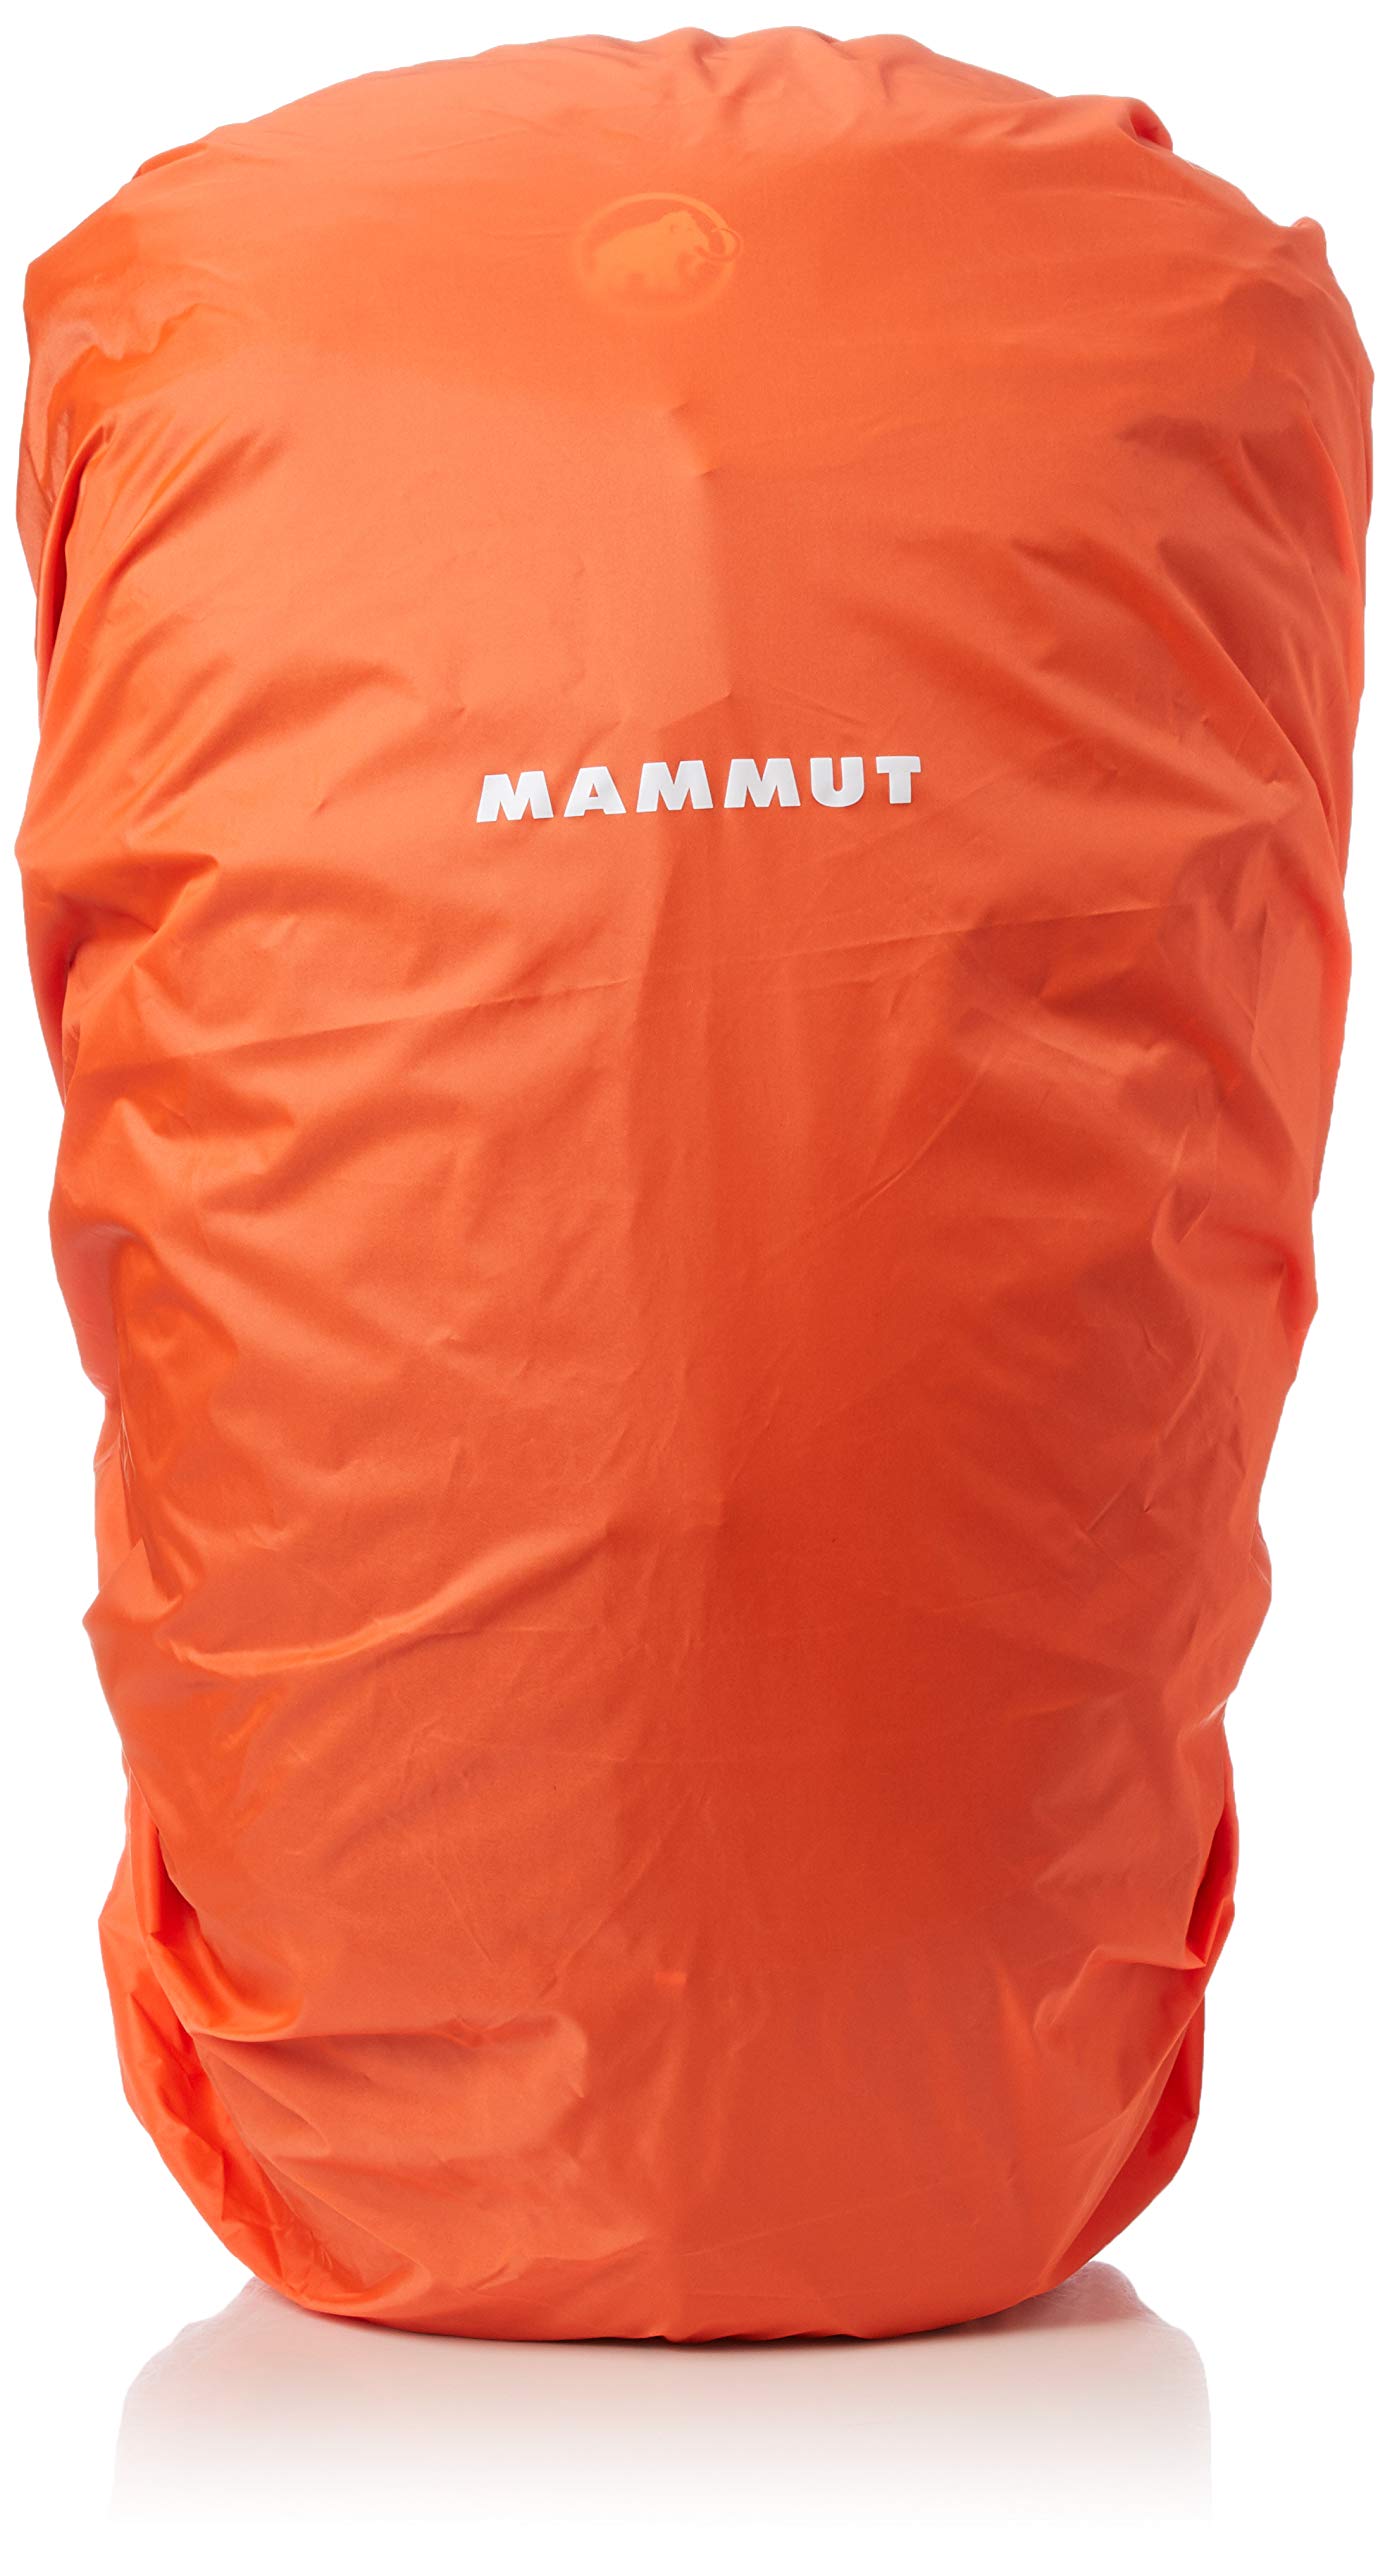 MAMMUT(マムート) Men's Backpacks, Black, One Size